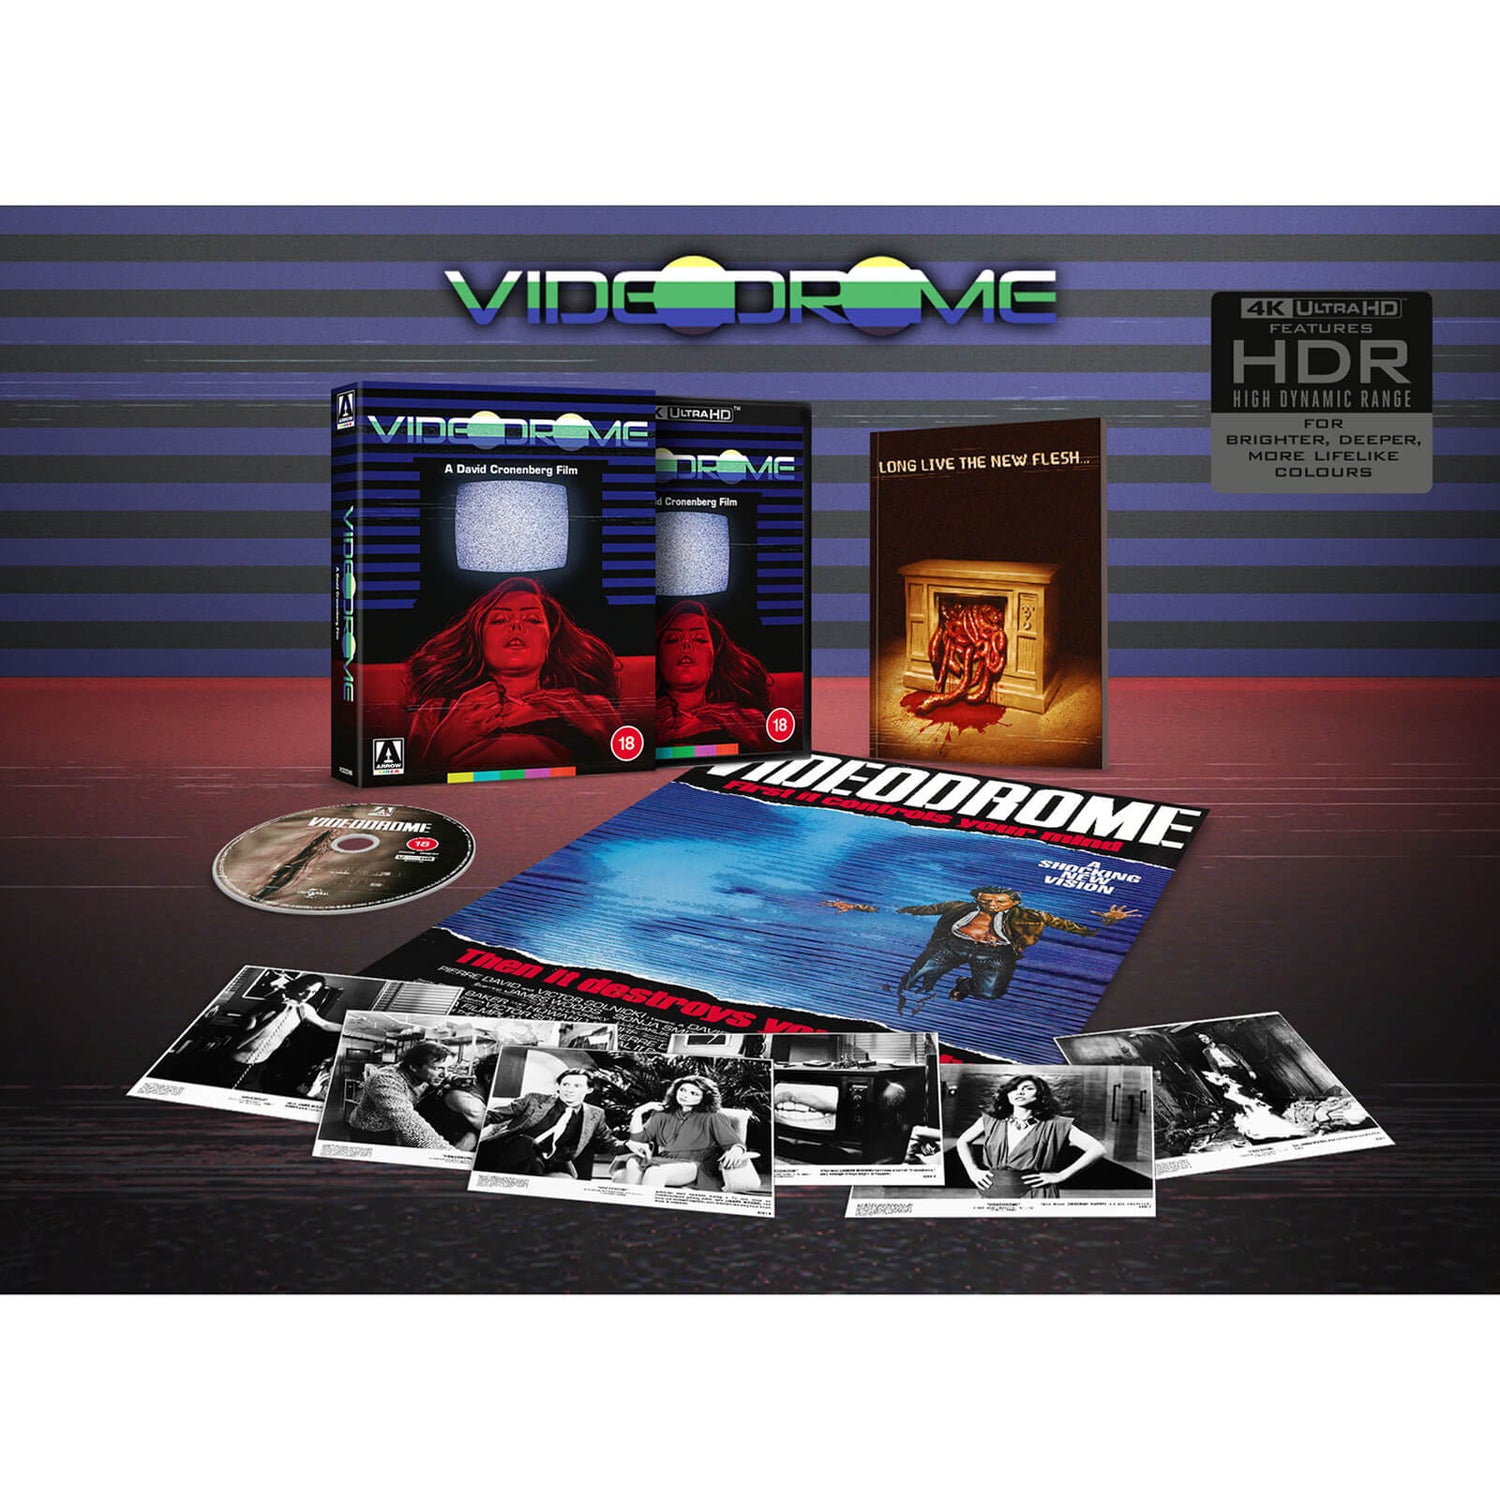 Videodrome Limited Edition 4K UHD